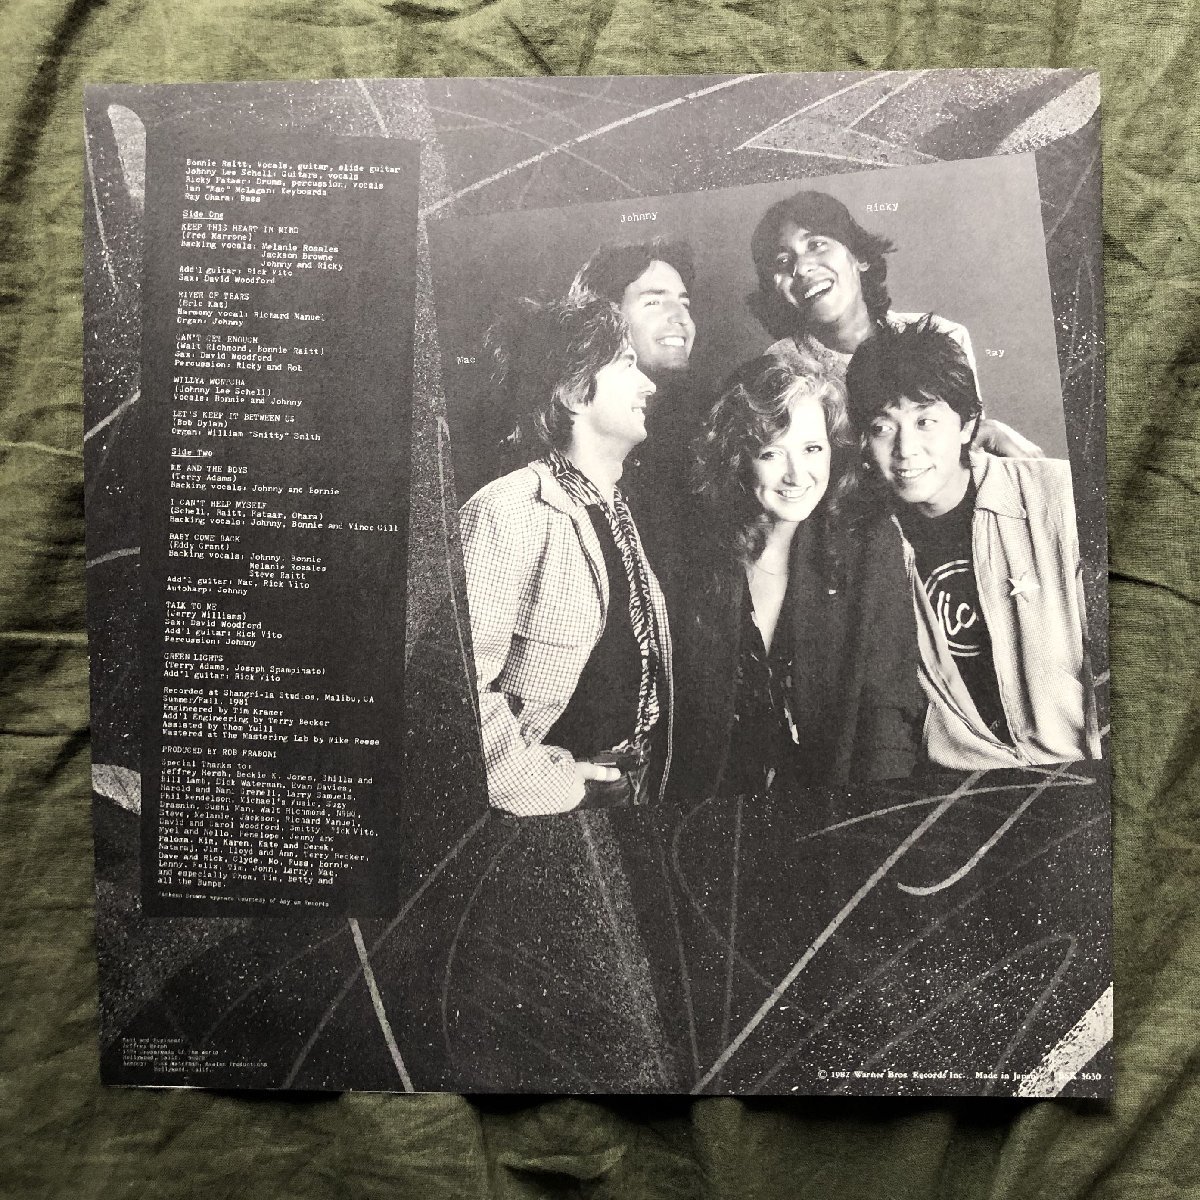  beautiful record beautiful jacket 1982 year domestic the first record bo knee * Ray toBonnie Raitt LP record green * light Green Light: small .., Ricky Fataar